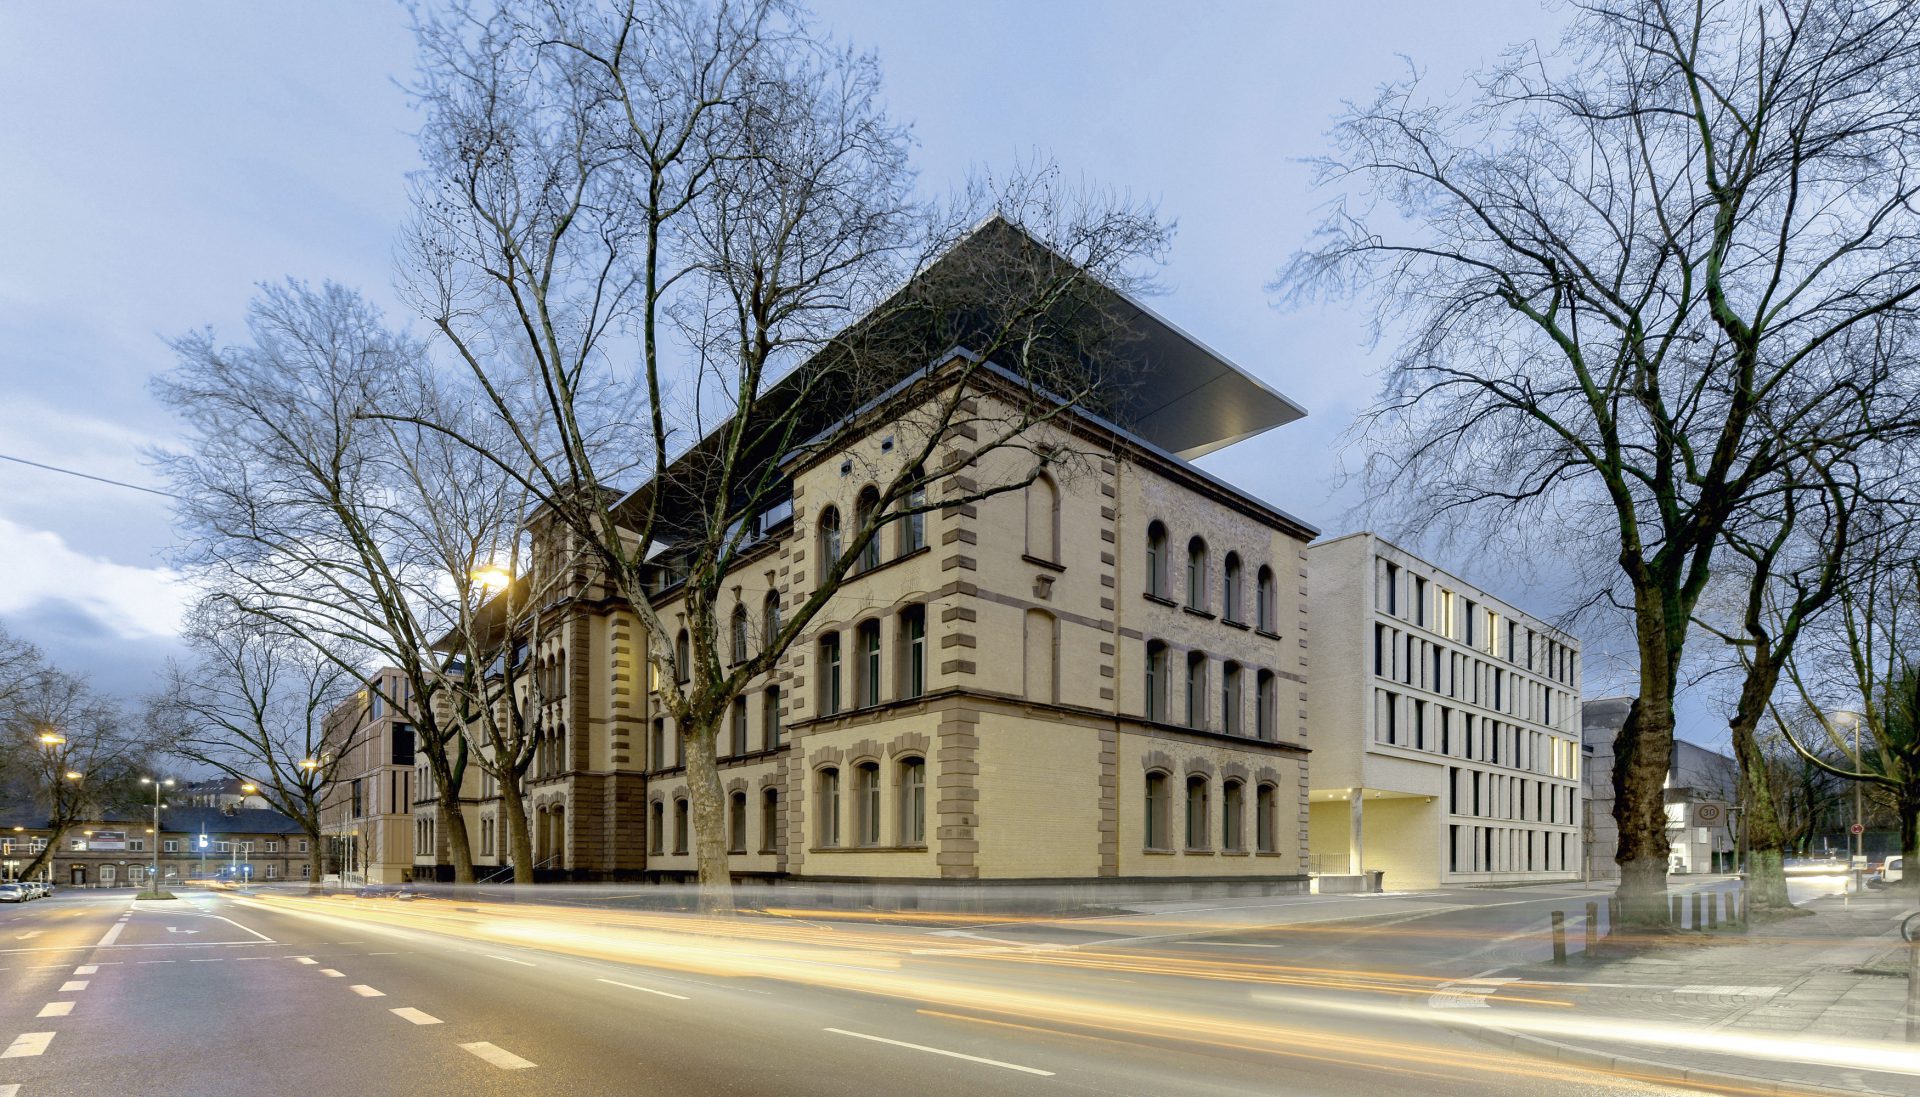 Justizzentrum Bochum